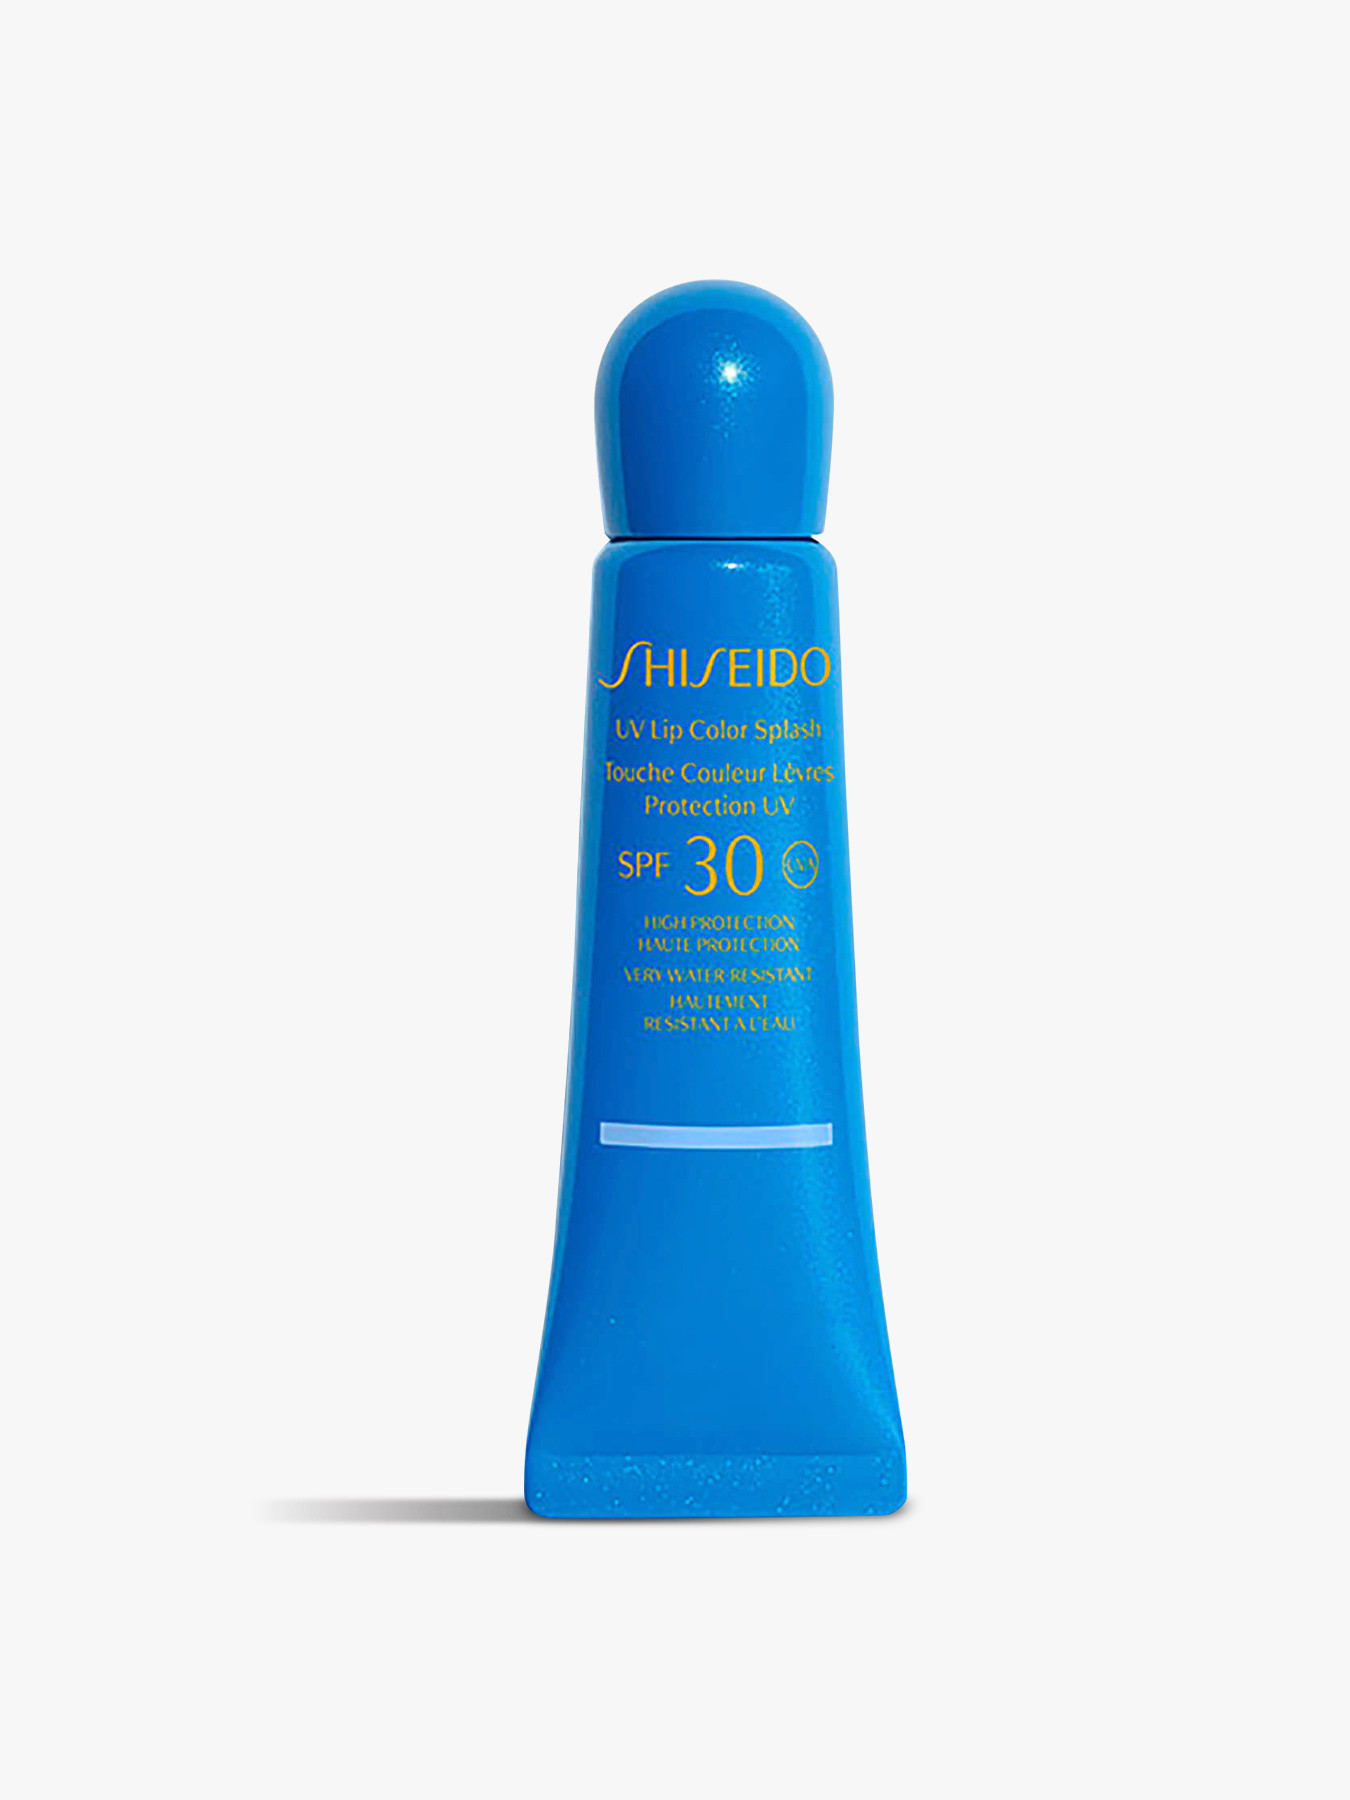 Shiseido 30. Shiseido Suncare солнцезащитный блеск для губ spf30. Shiseido для губ 30 SPF. Shiseido блеск для губ с СПФ. Shiseido Global Suncare UV Lip Color Splash.